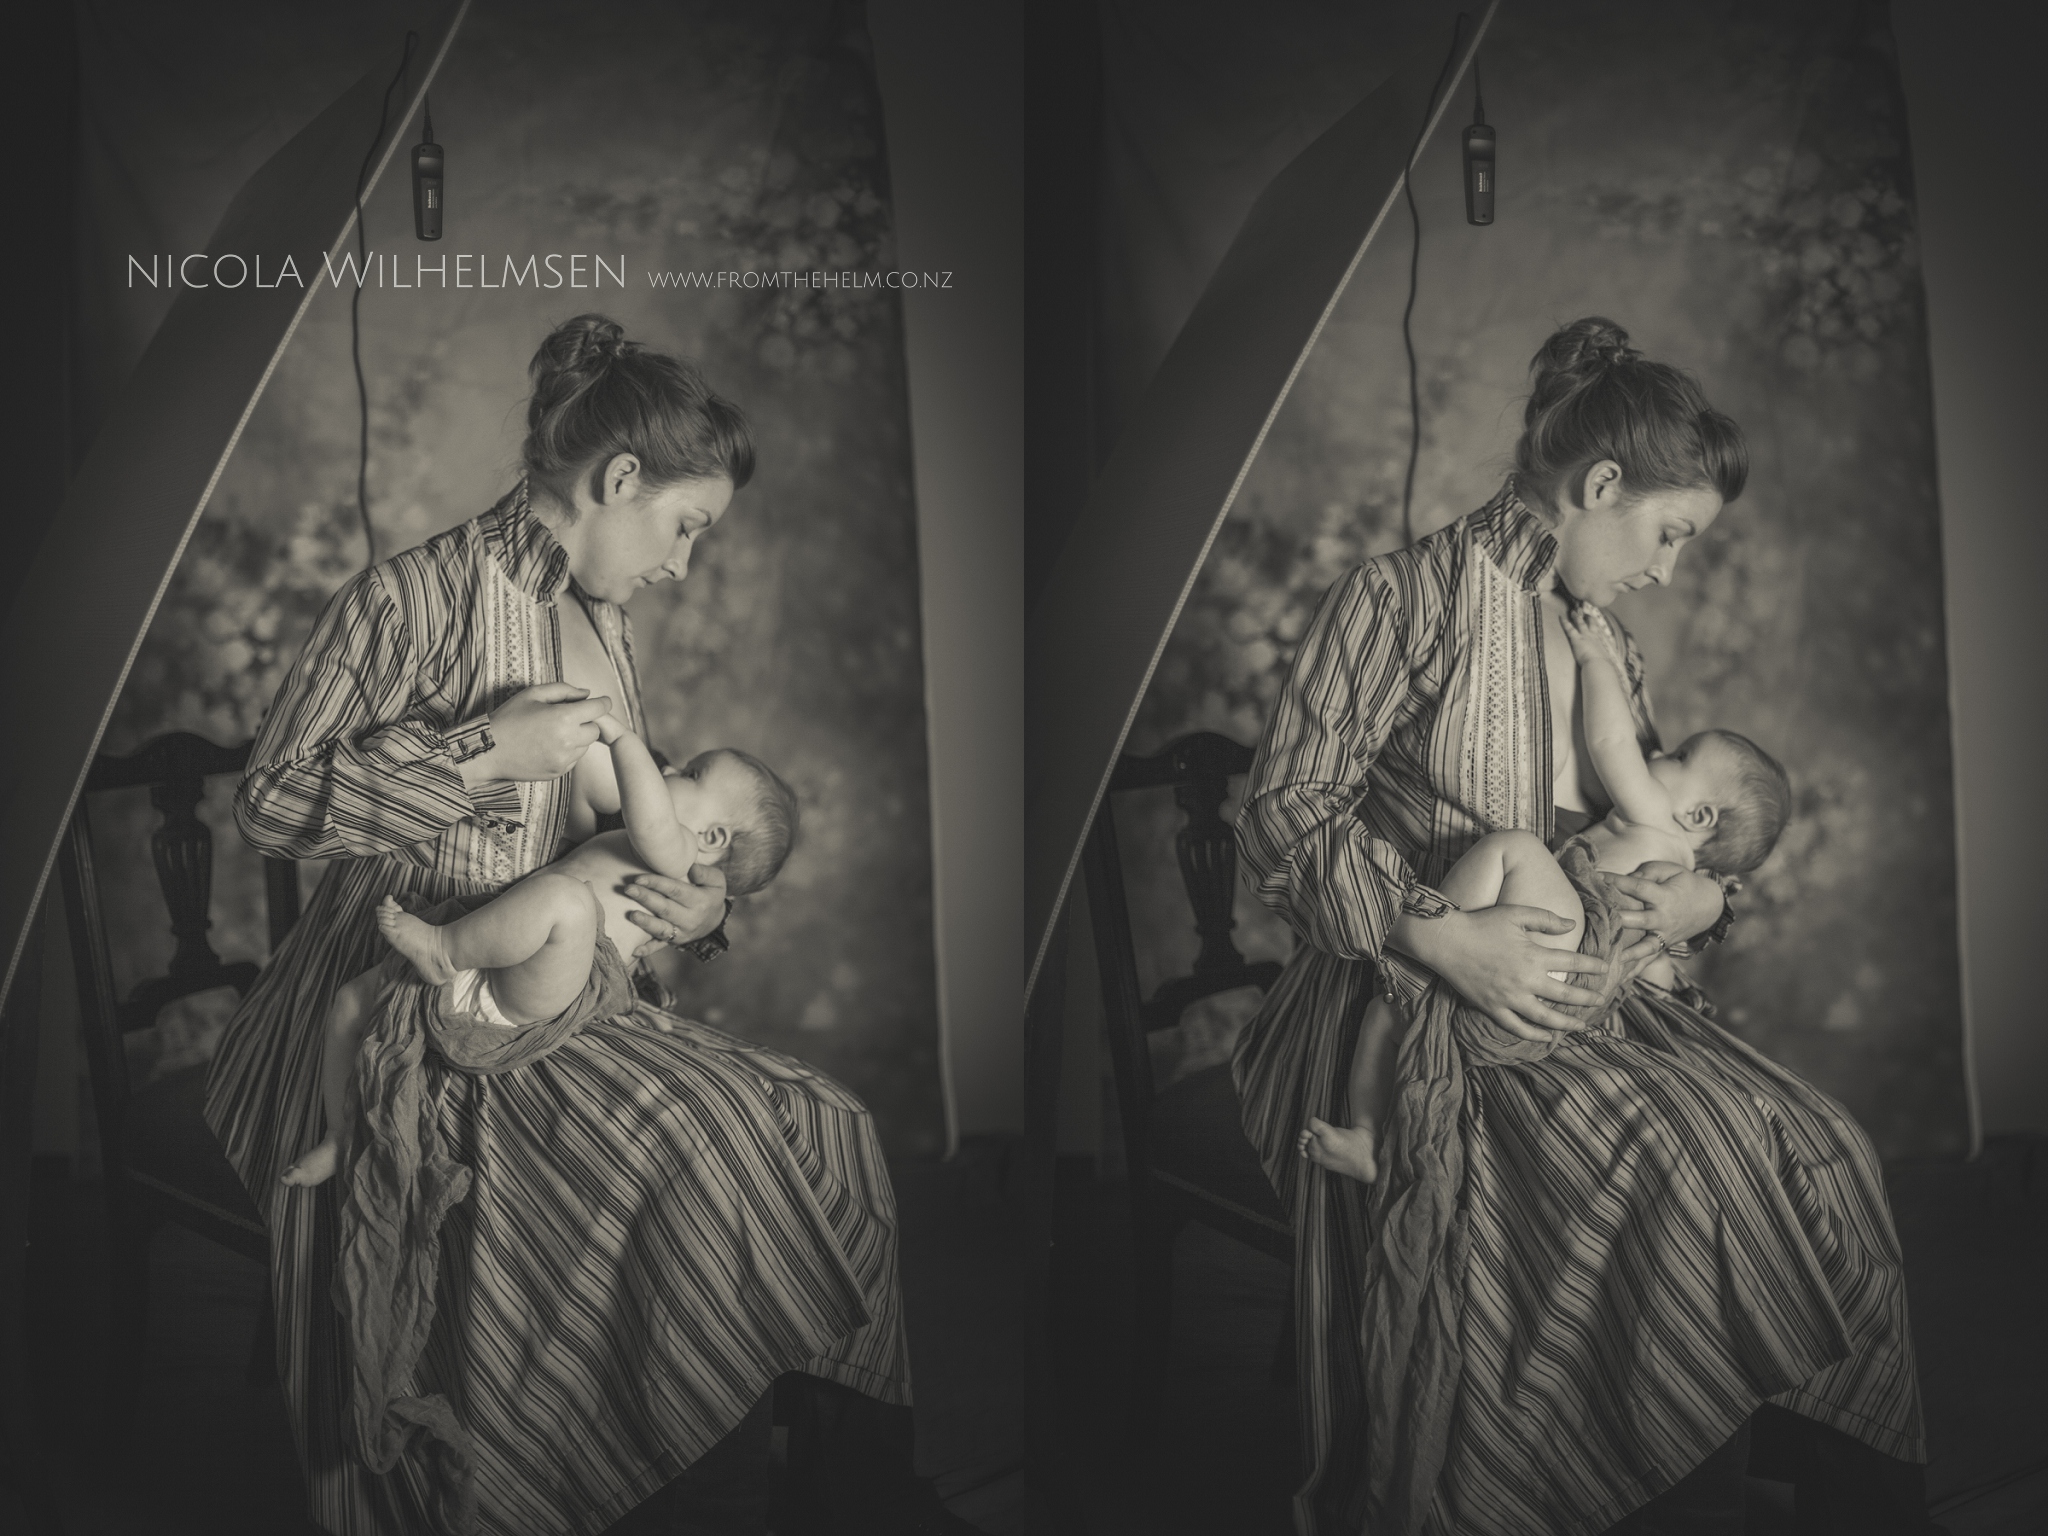 NicolaWilhelmsen_fromthehelm_breastfeeding_fineartphotography (1).jpg